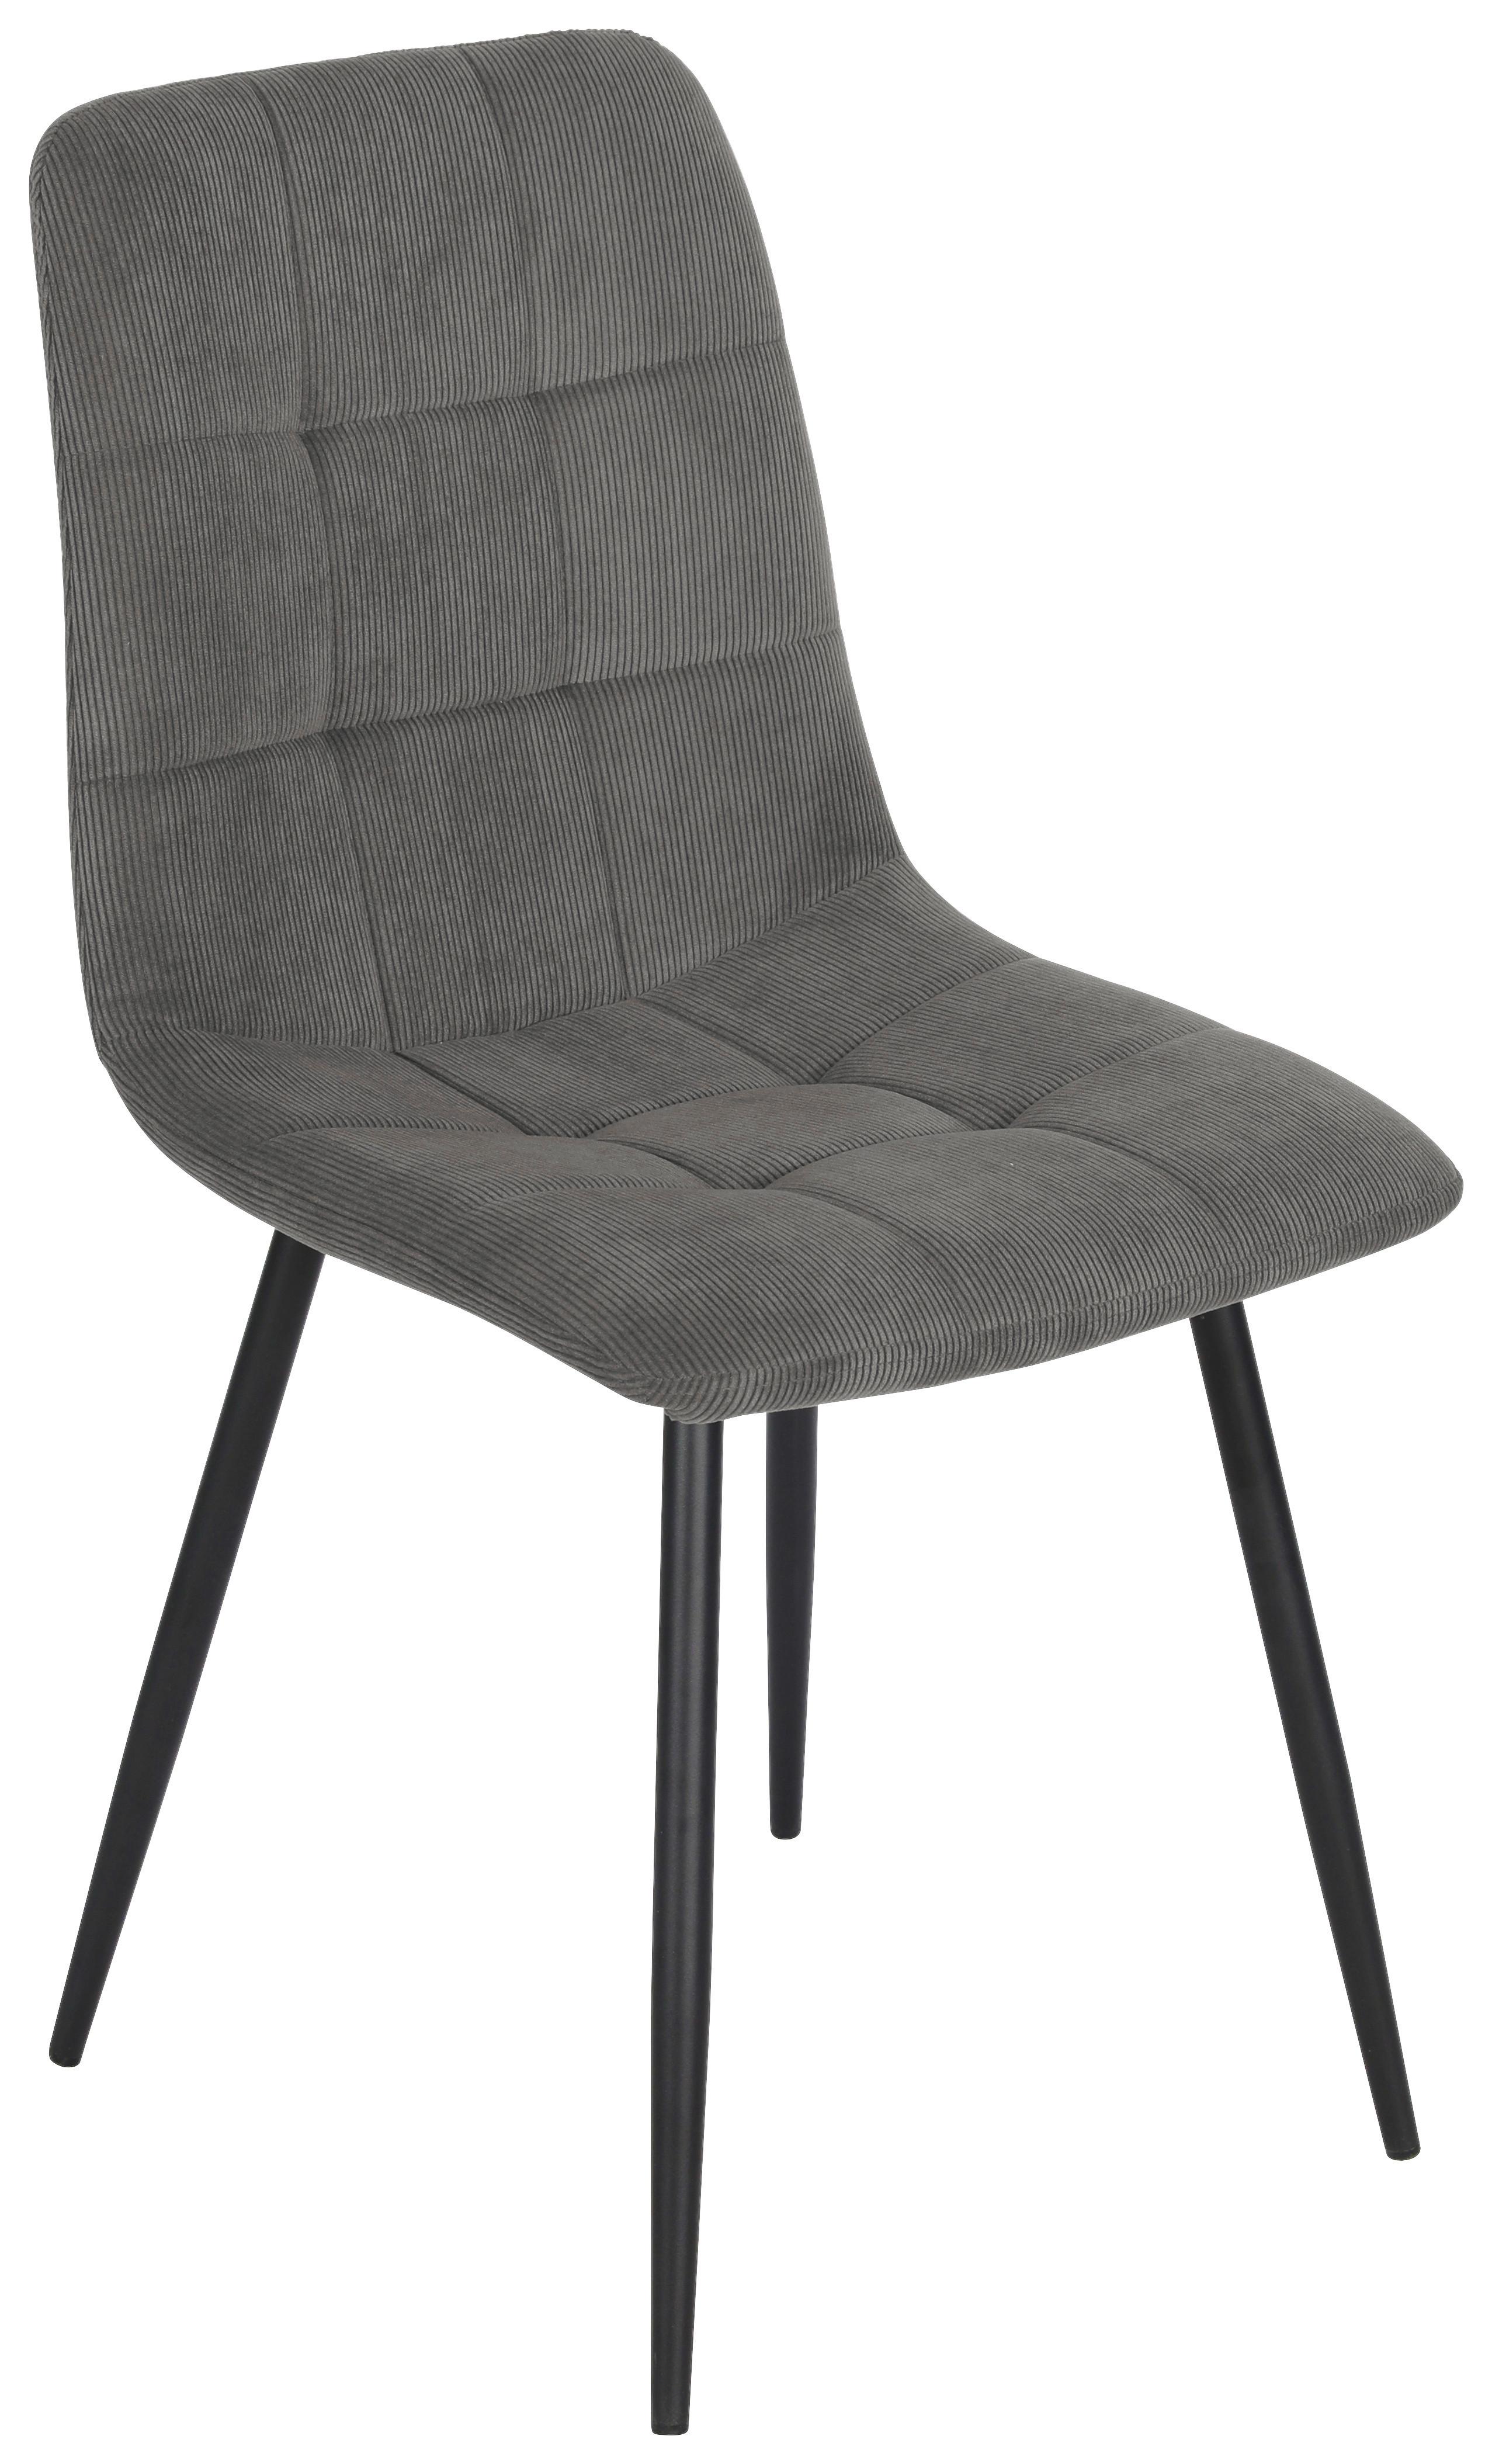 Židle Nino - šedá/černá, Moderní, kov/dřevo (45/87/57cm) - Modern Living